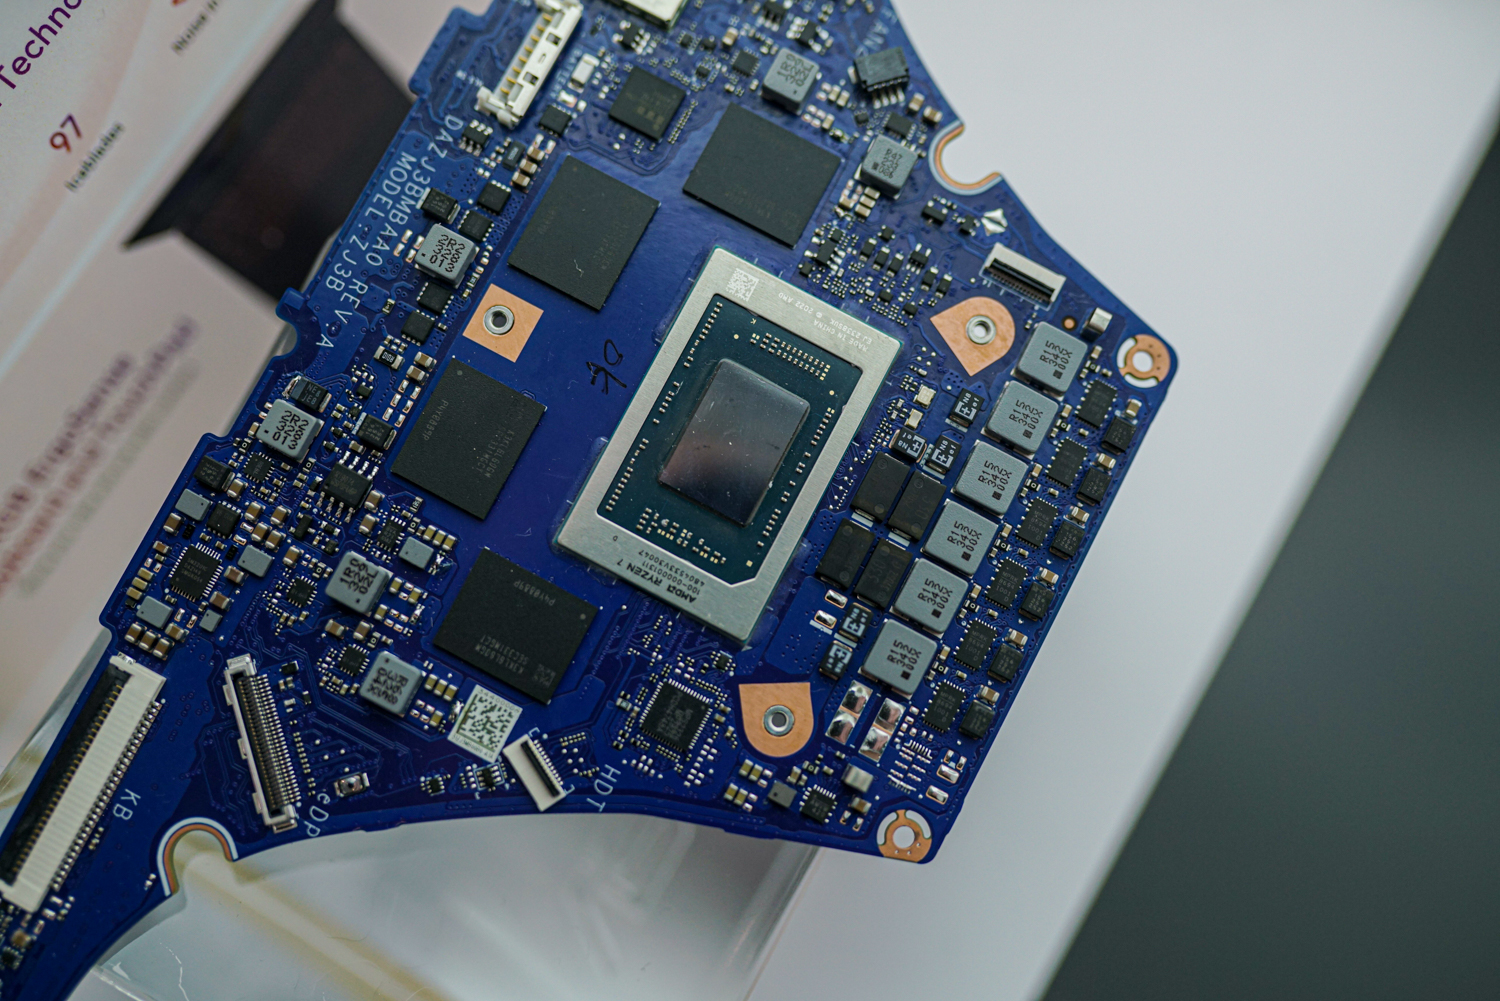 An AMD Ryzen CPU socketed in a motherboard.